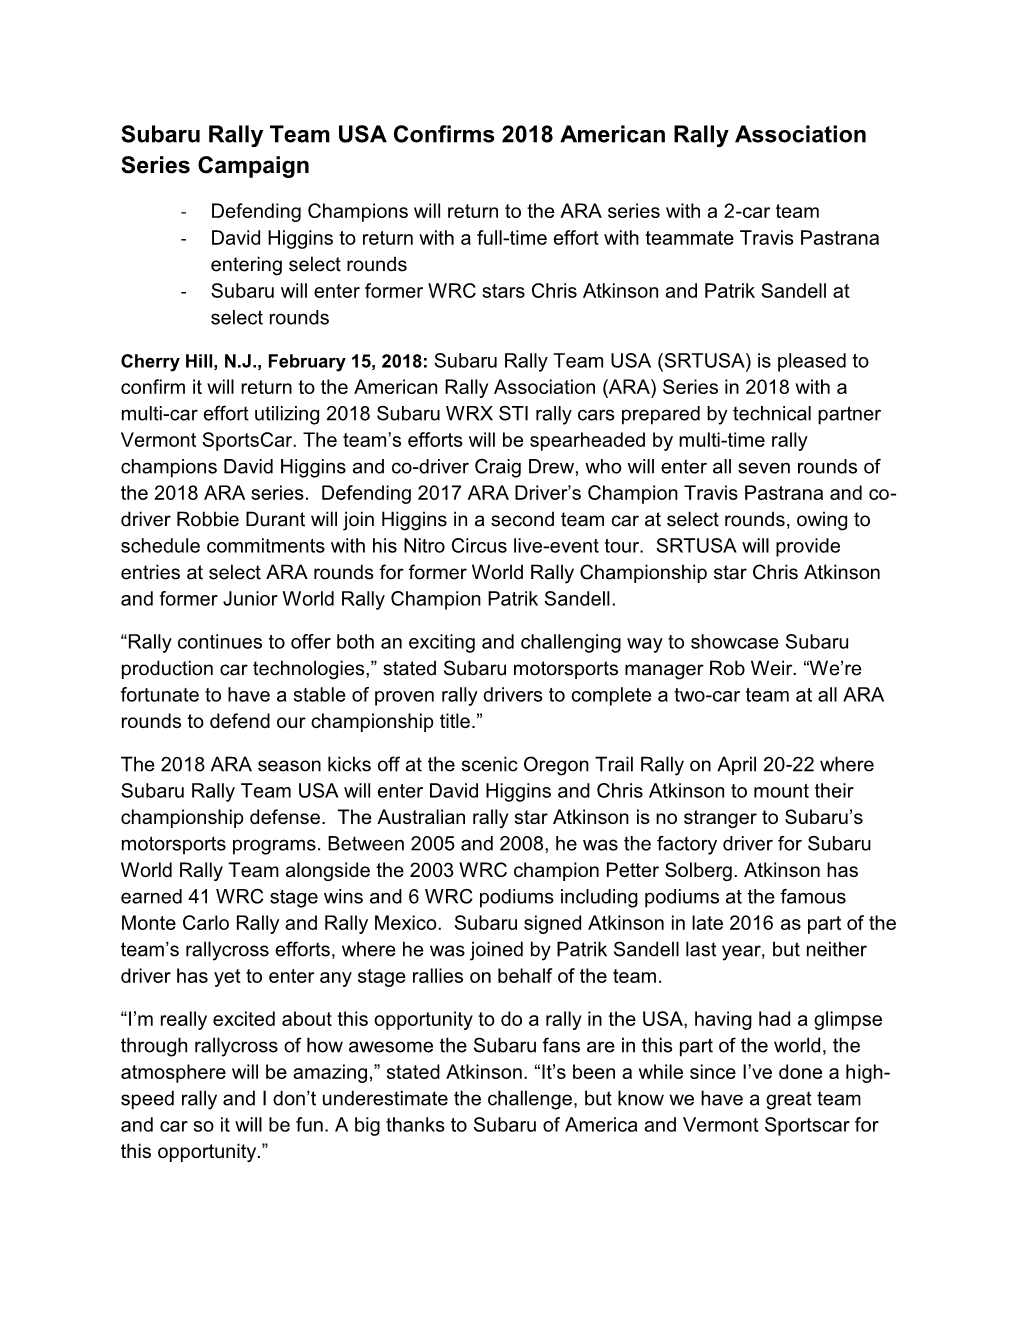 Subaru Rally Team USA Confirms 2018 American Rally Association Series Campaign